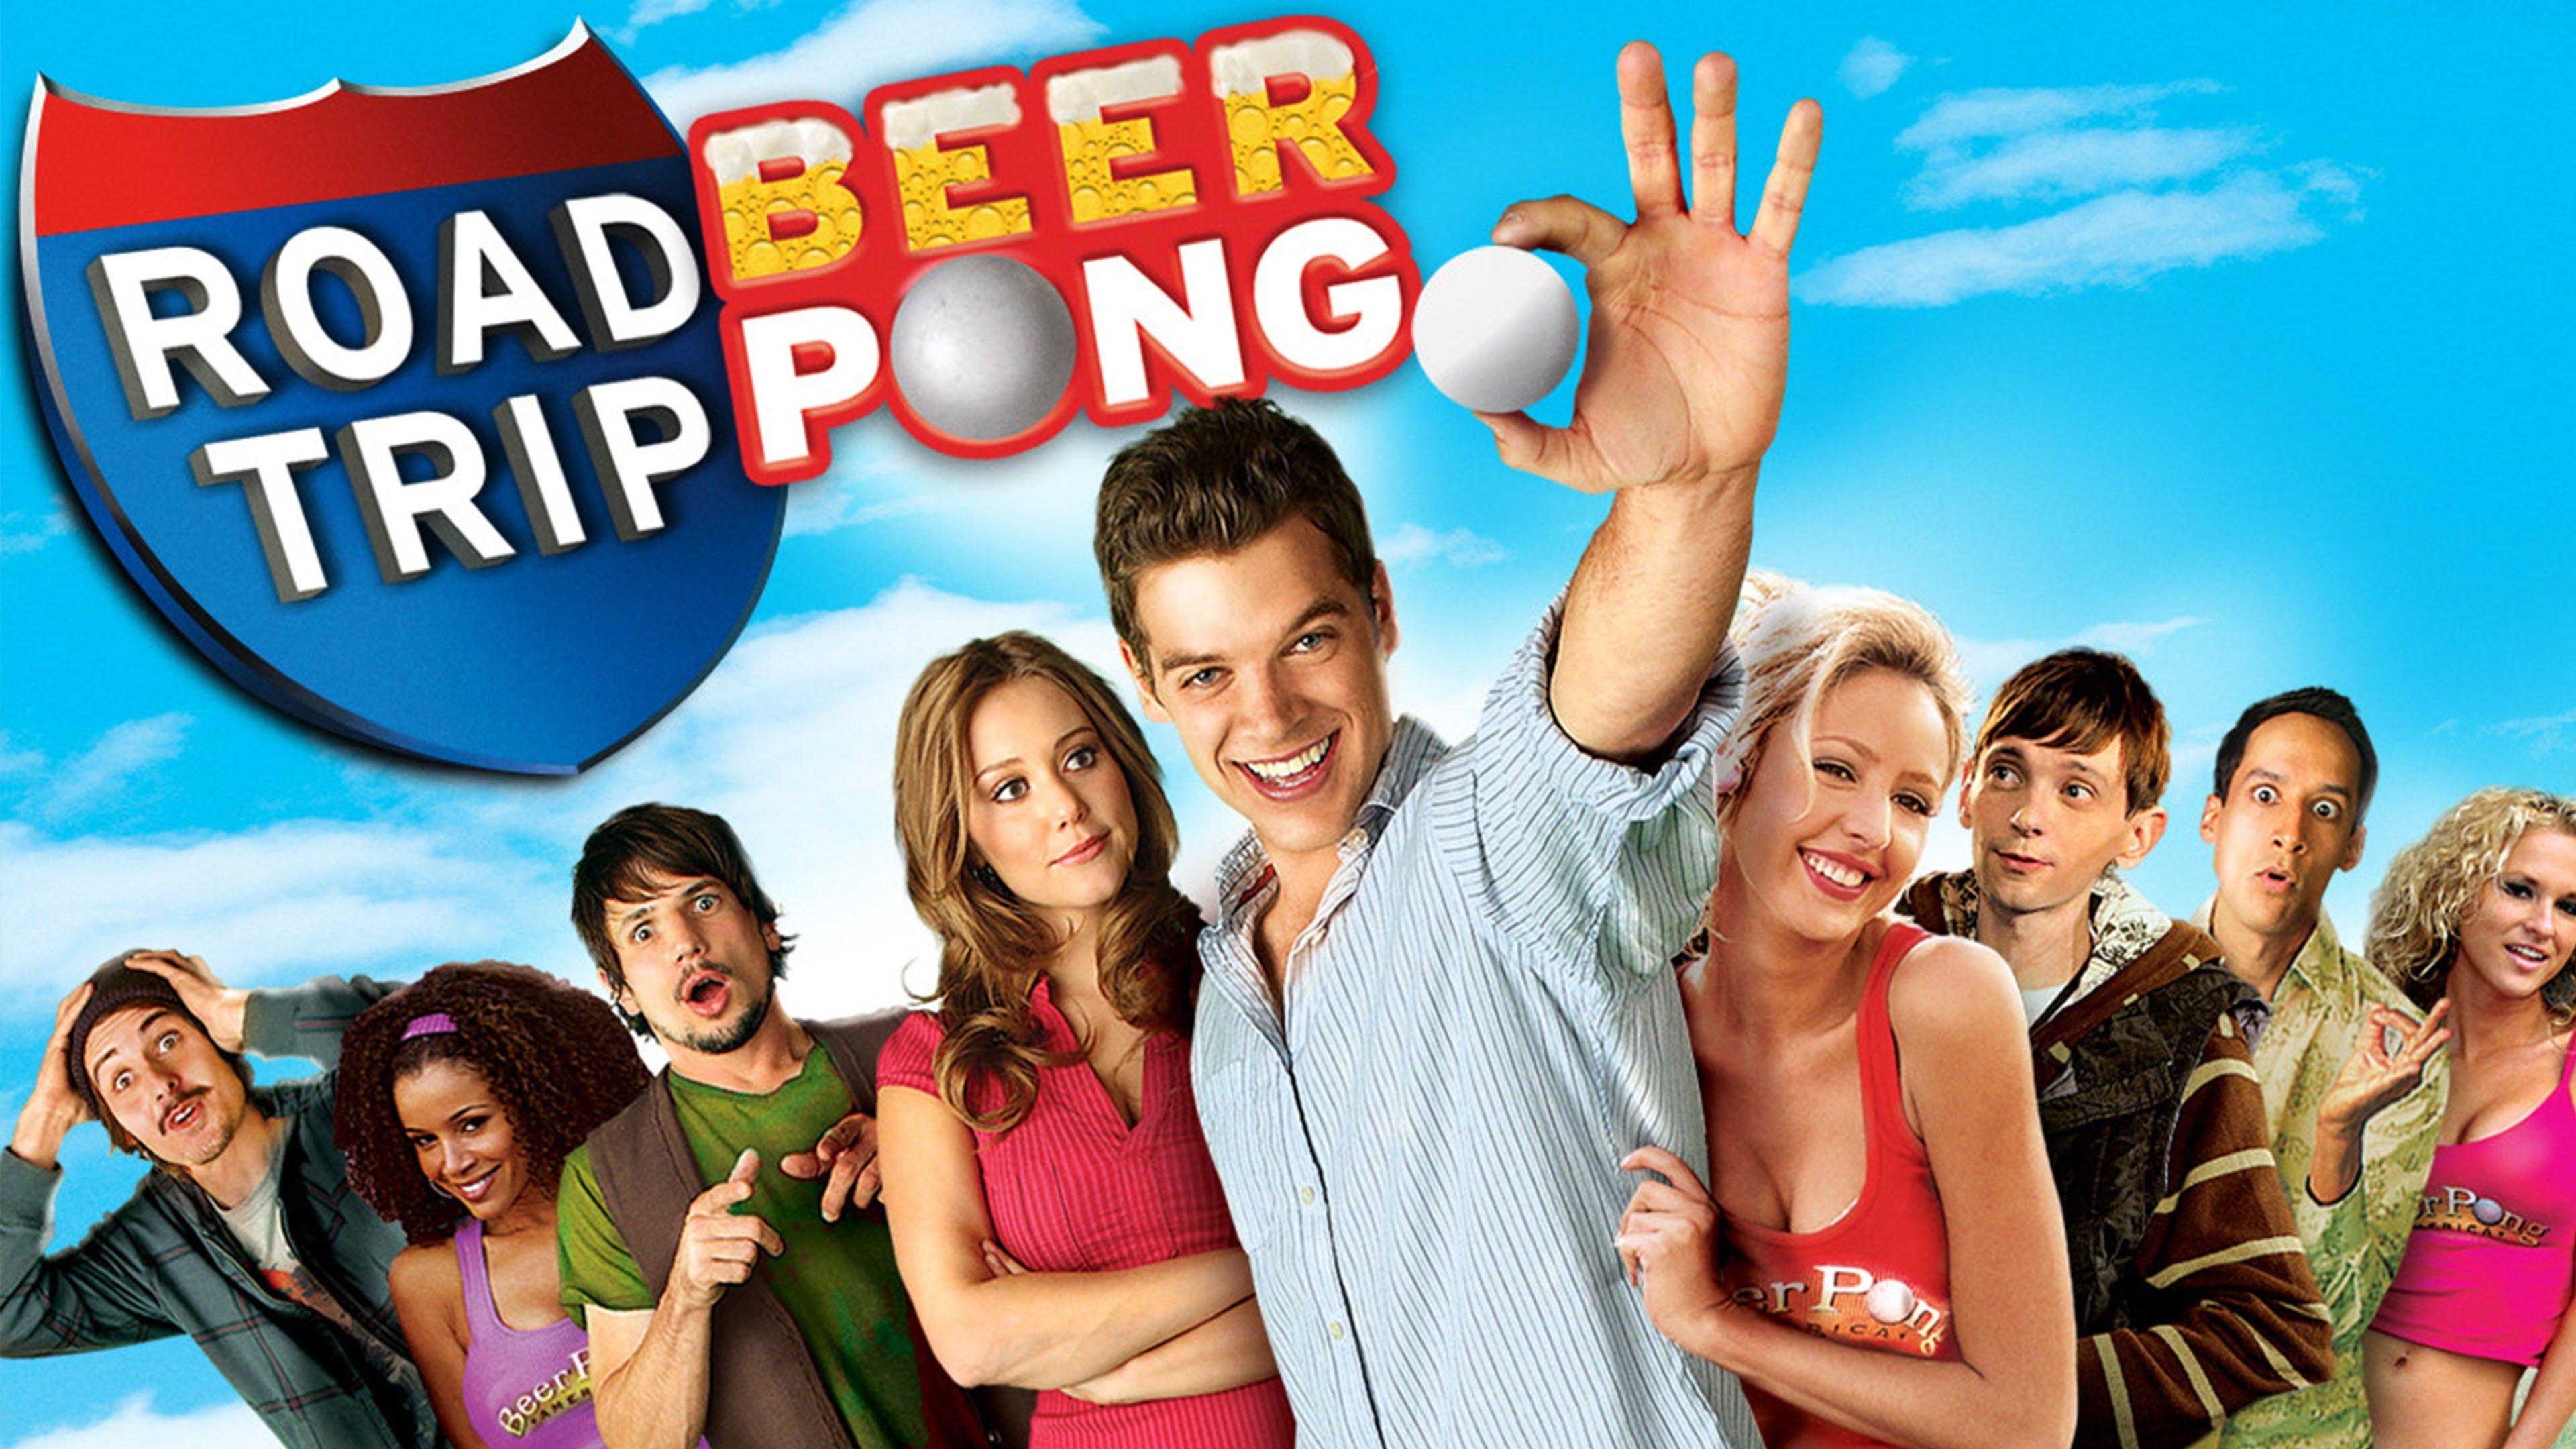 nonton film road trip beer pong